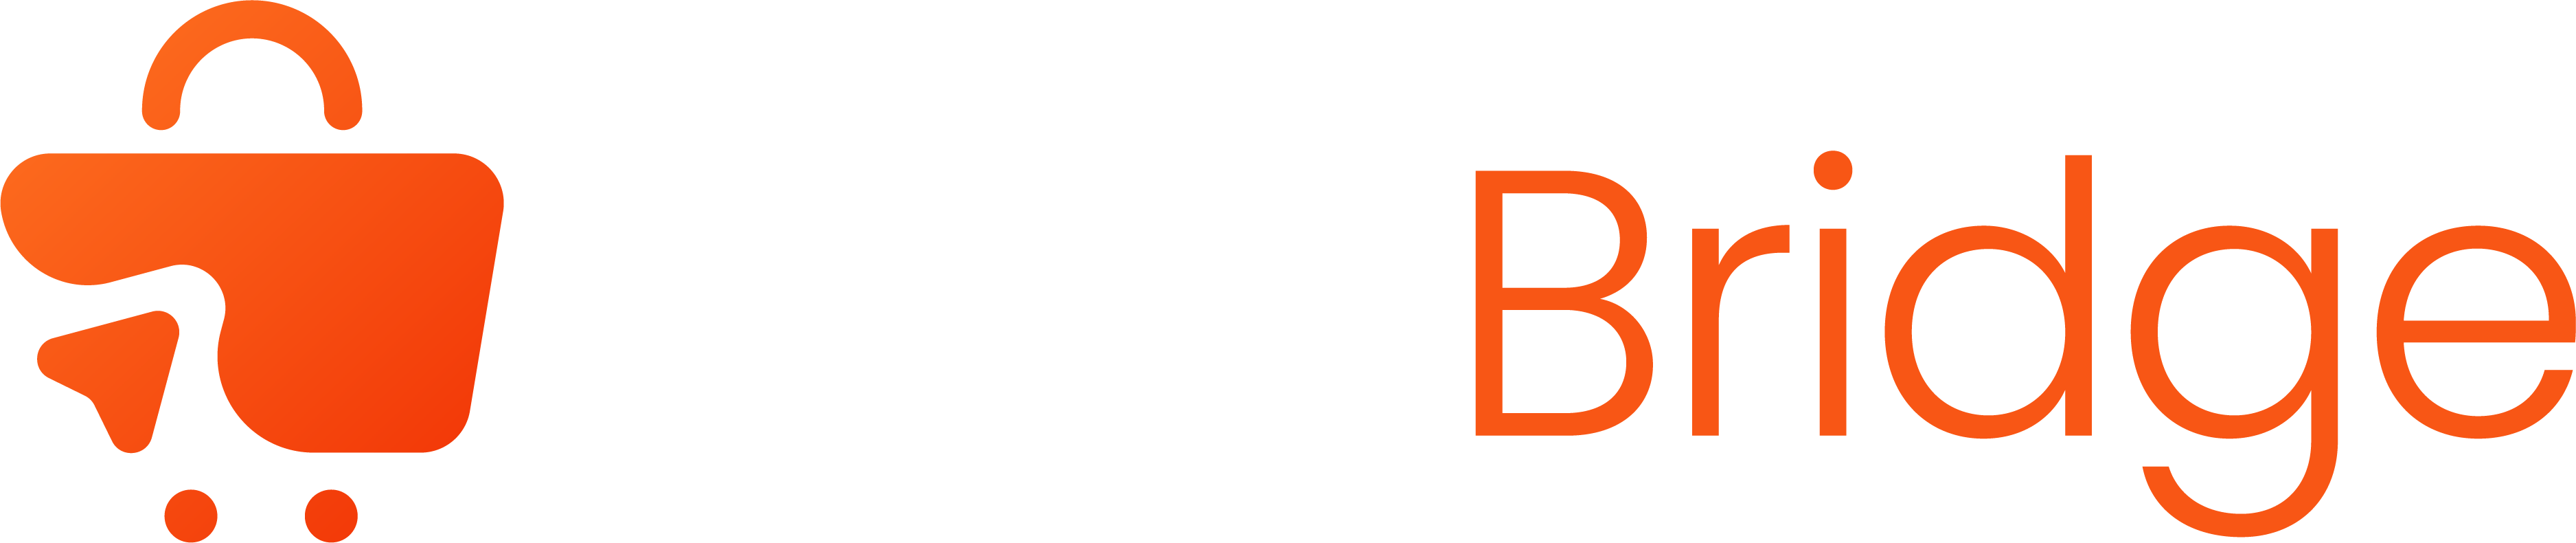 StallBridge Logo New w